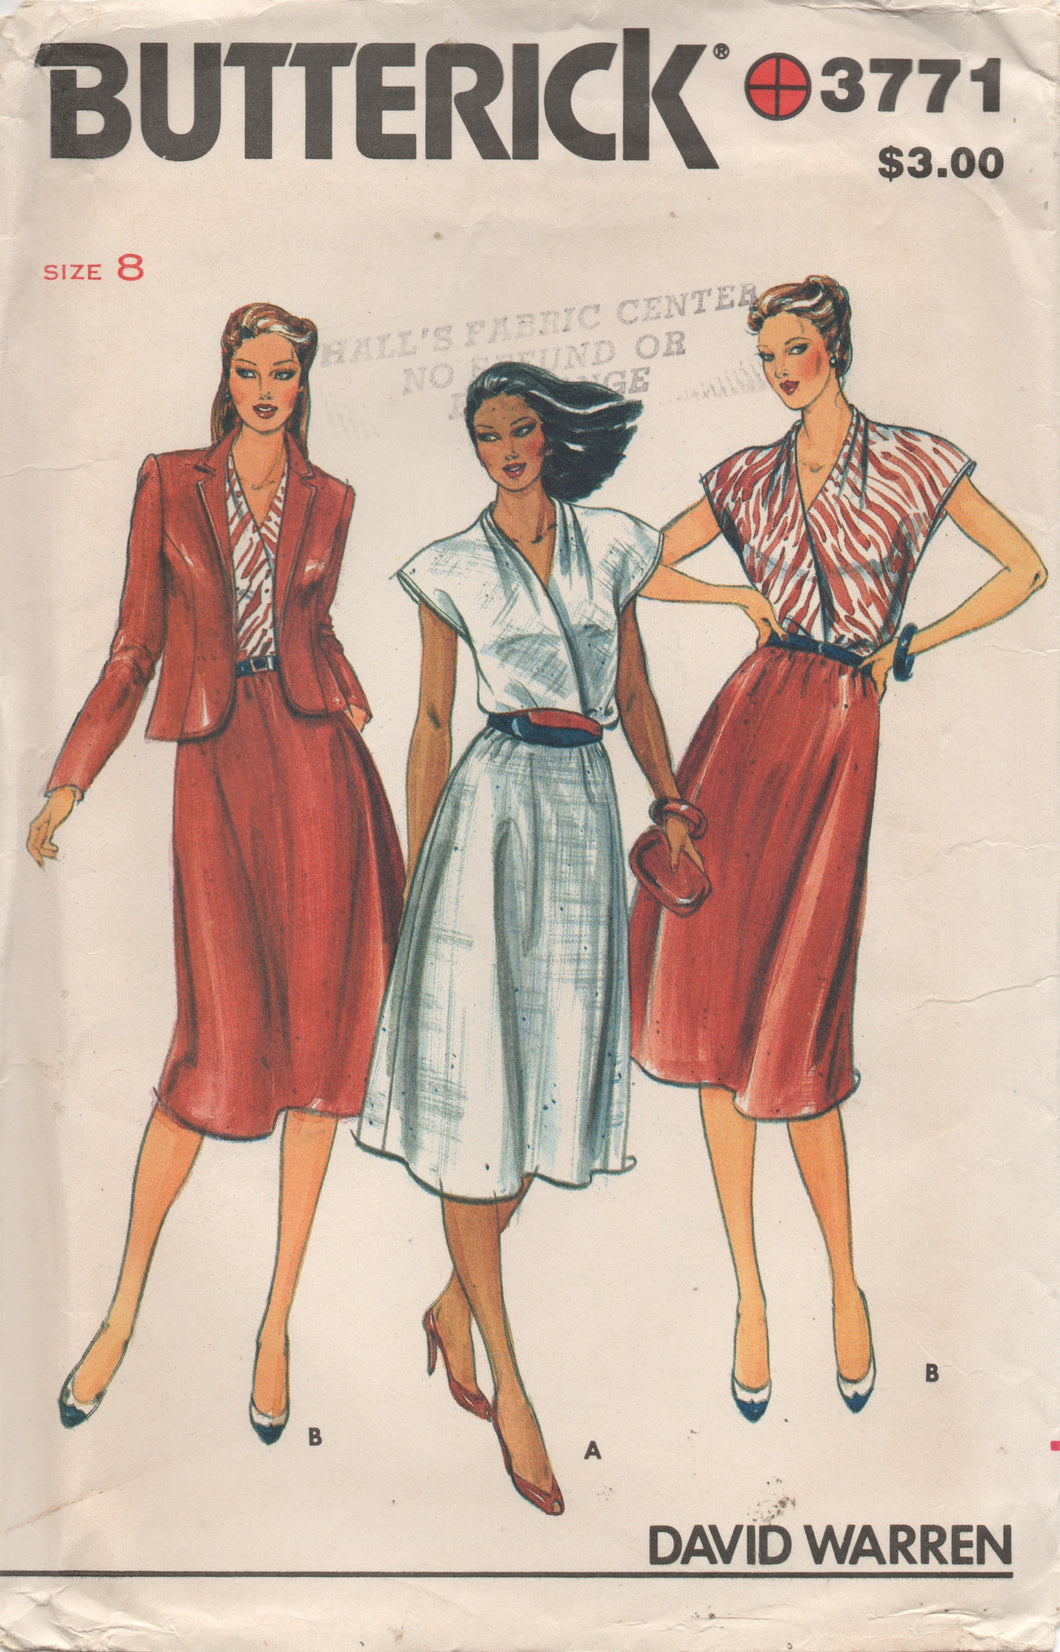 1980's Butterick Dress pattern with Surplice bodice, A line skirt and Jacket pattern - Bust 31.5